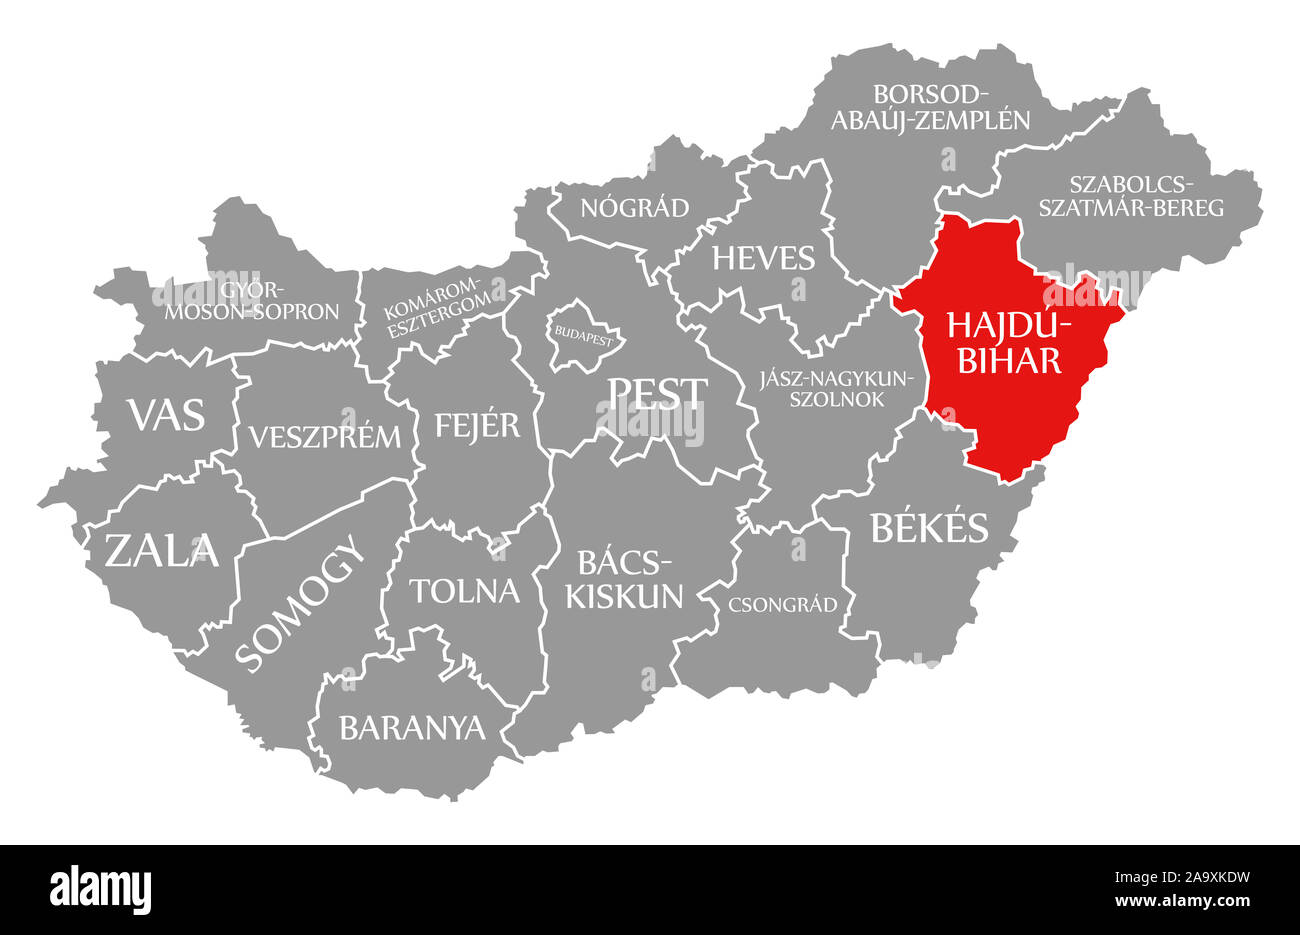 Hajdu-Bihar red highlighted in map of Hungary Stock Photo